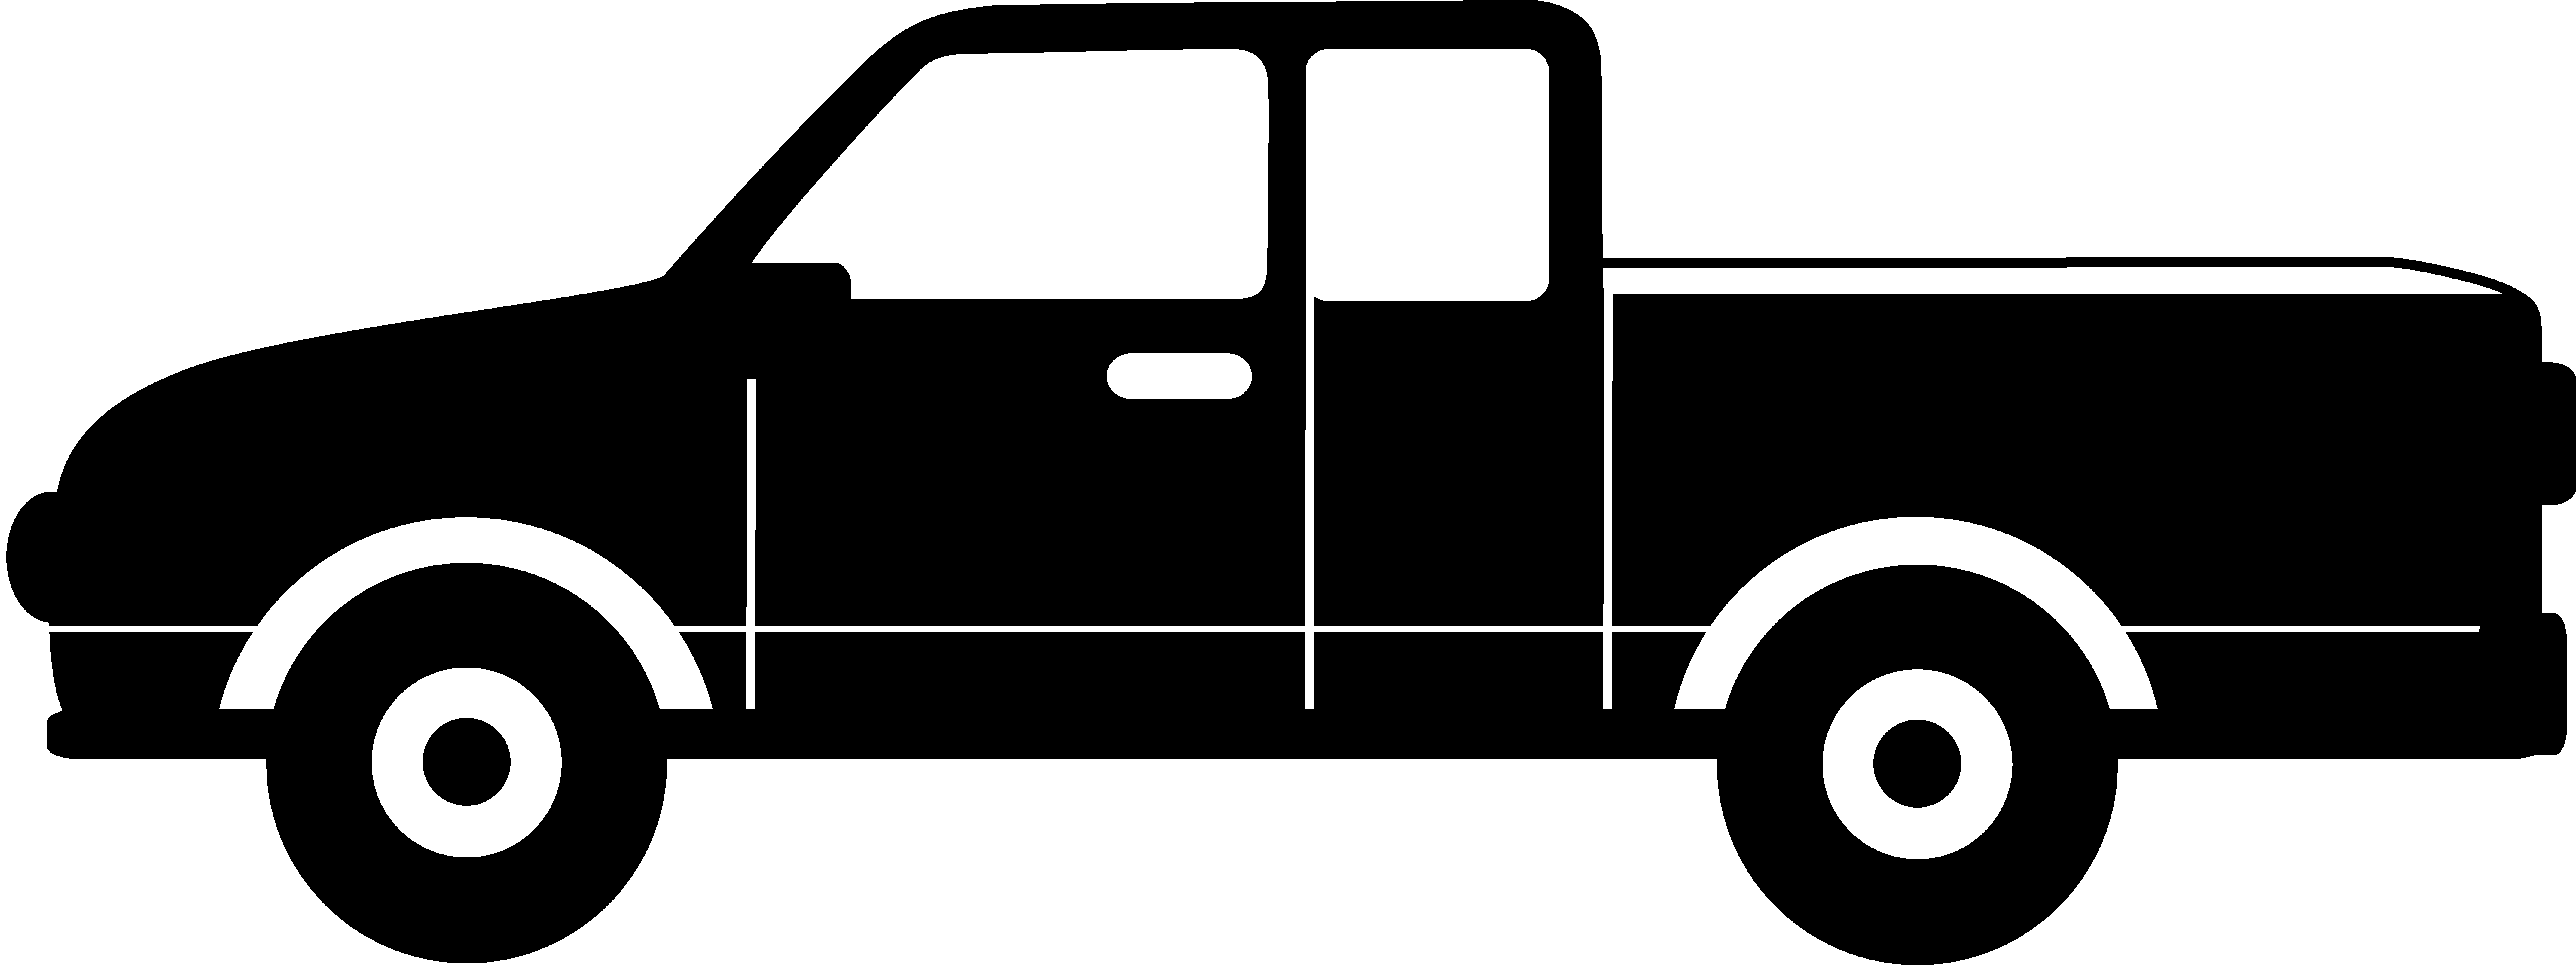 Clip Art Of Trucks - Accent Auto Vector, Transparent background PNG HD thumbnail